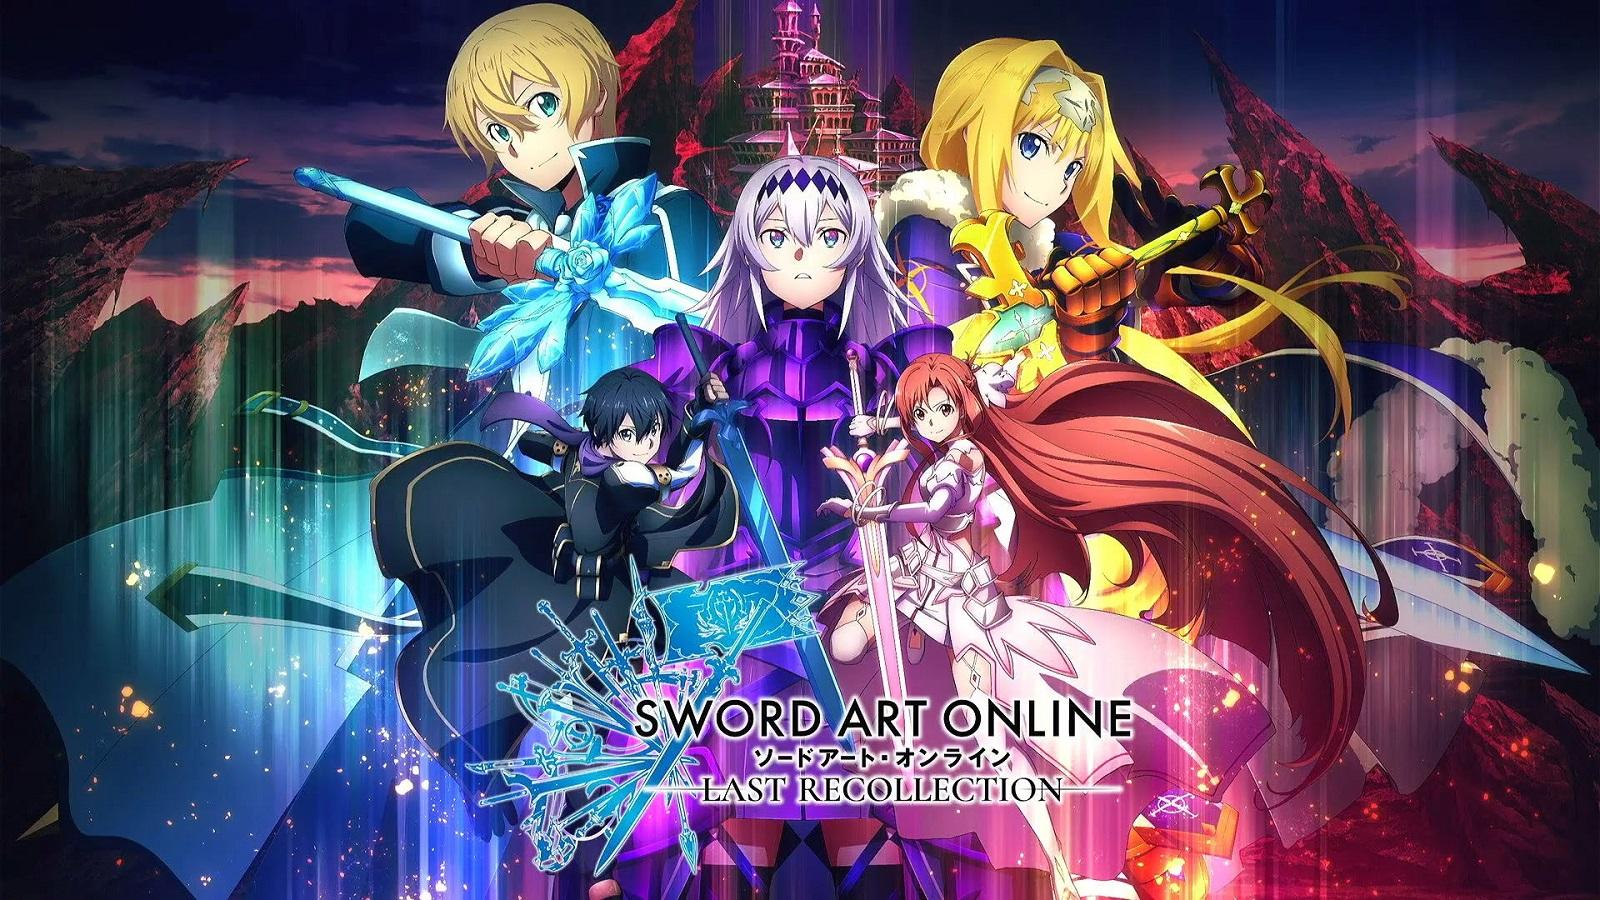 Sword Art Online Progressive 2 ganha primeiro teaser; confira